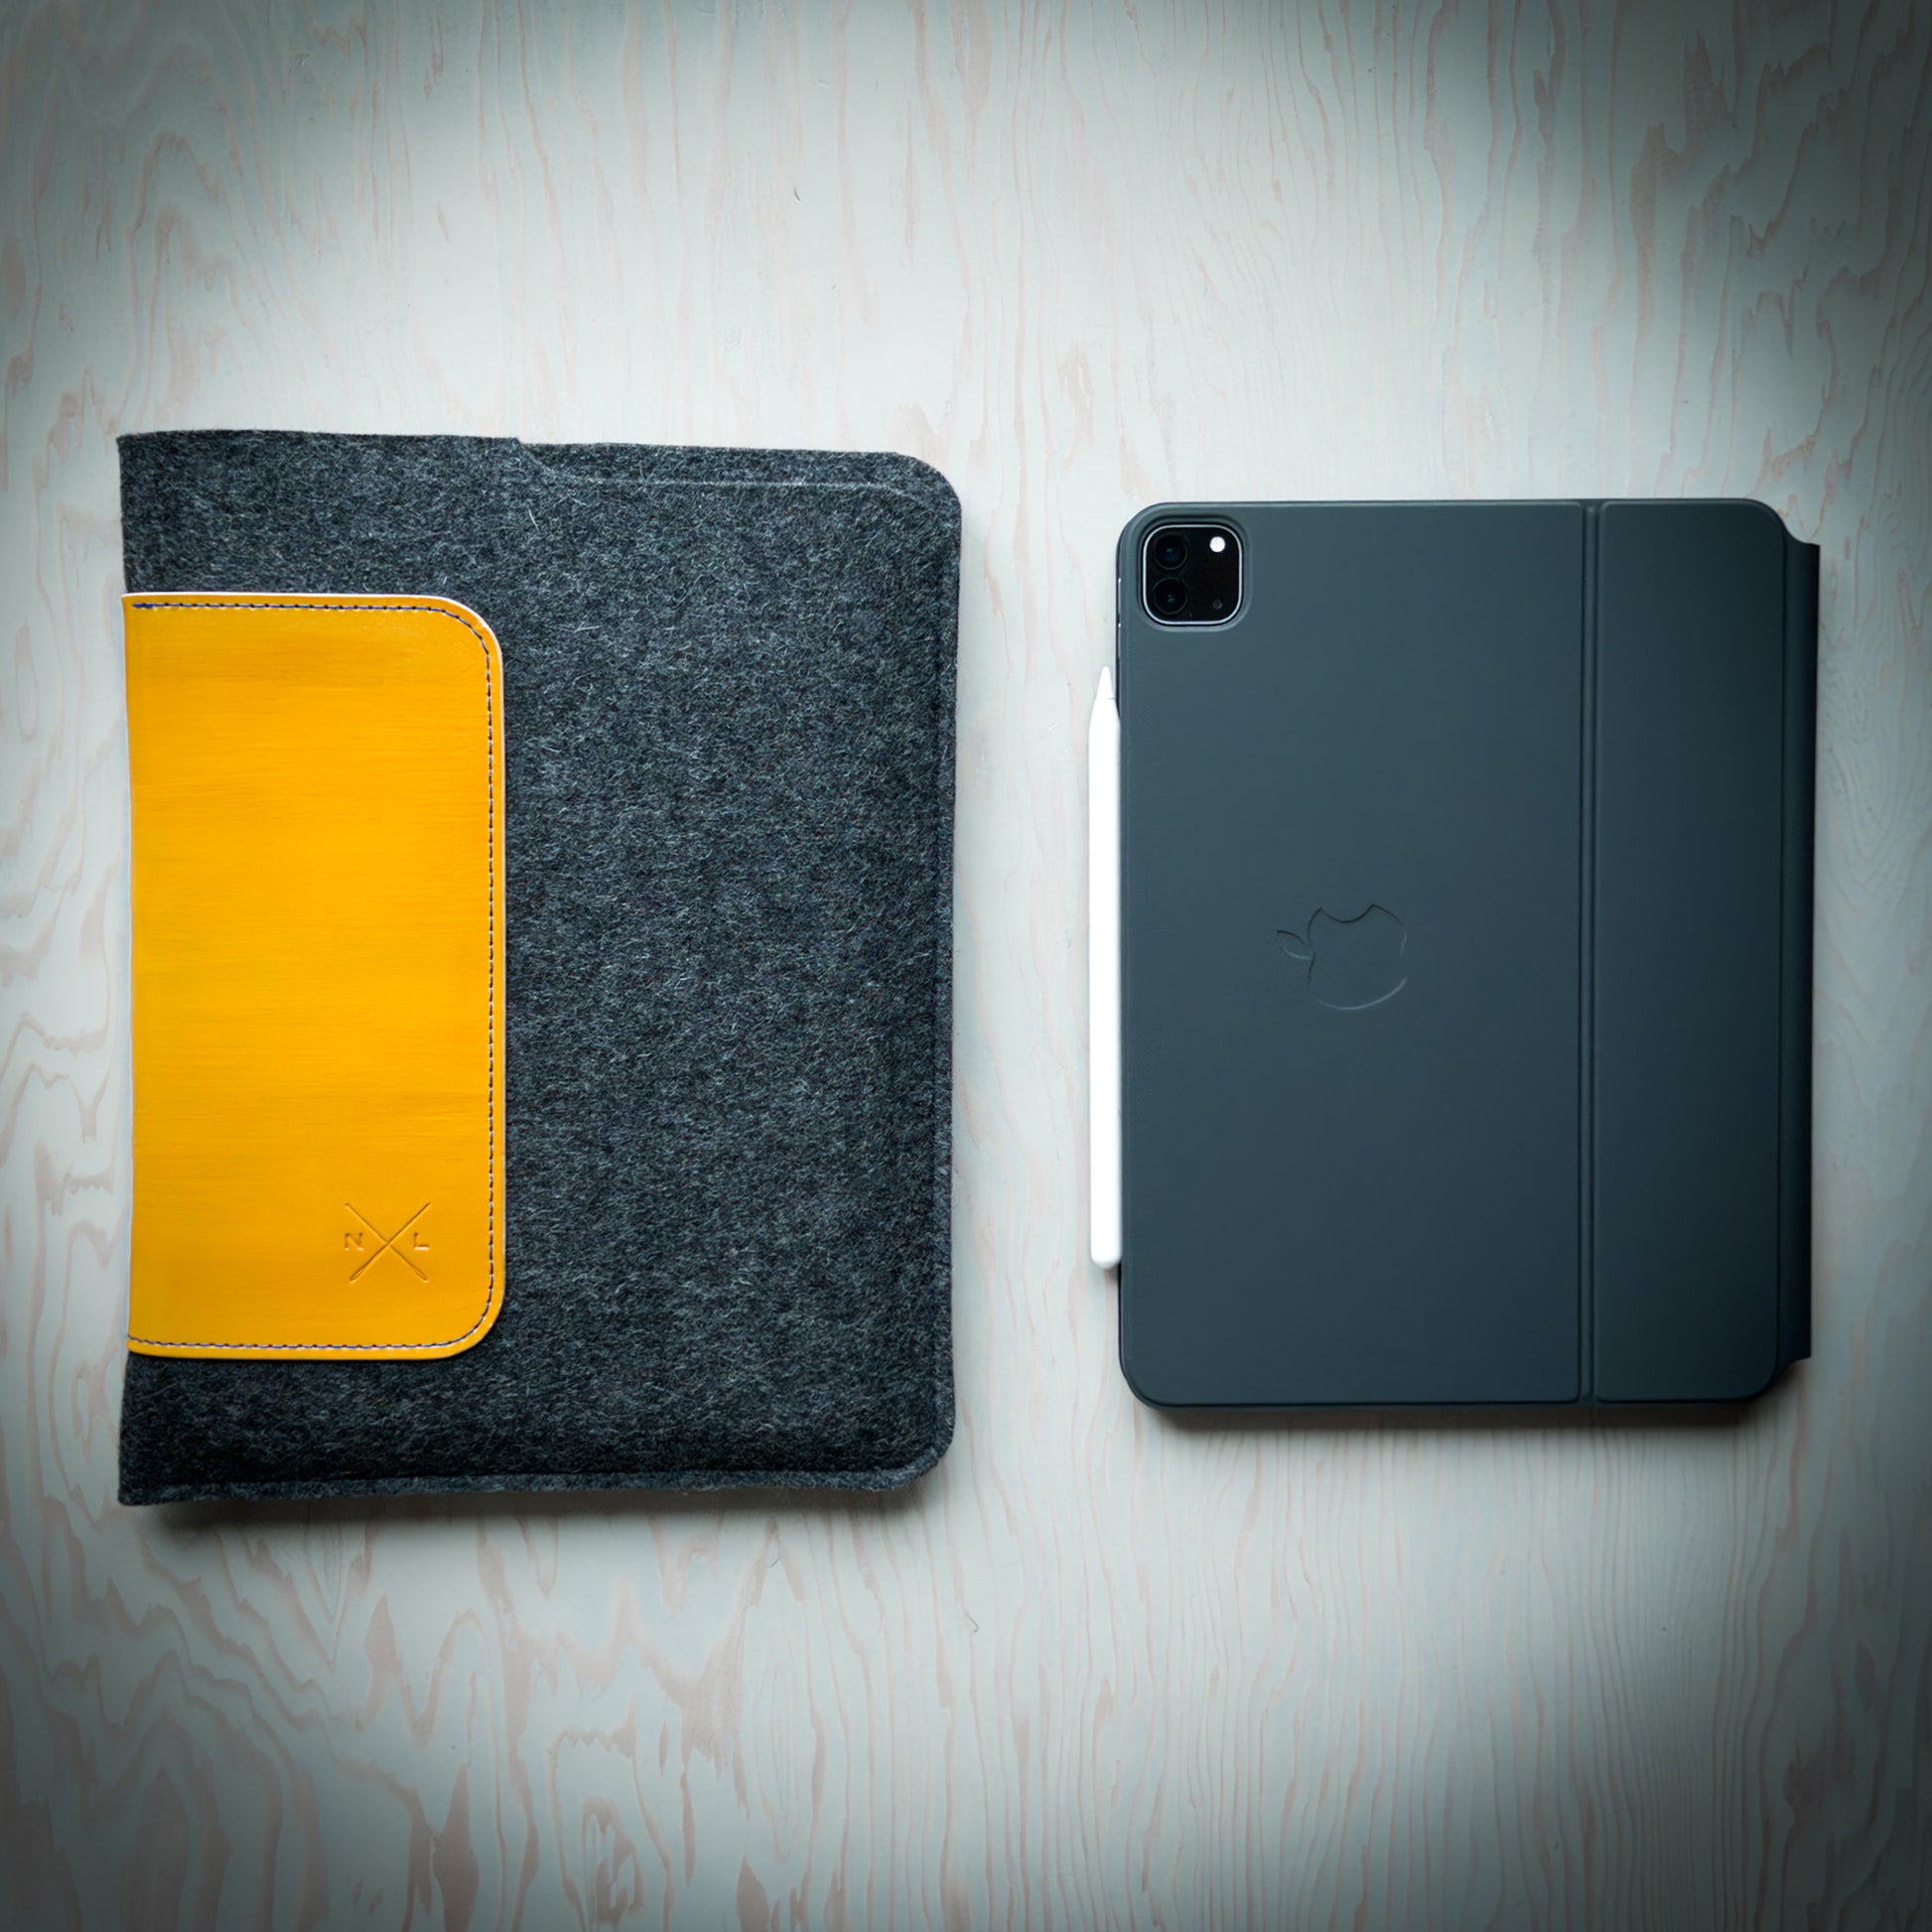 iPad Pro Sleeve in Yellow Leather and Wool Felt Handmade in Canada